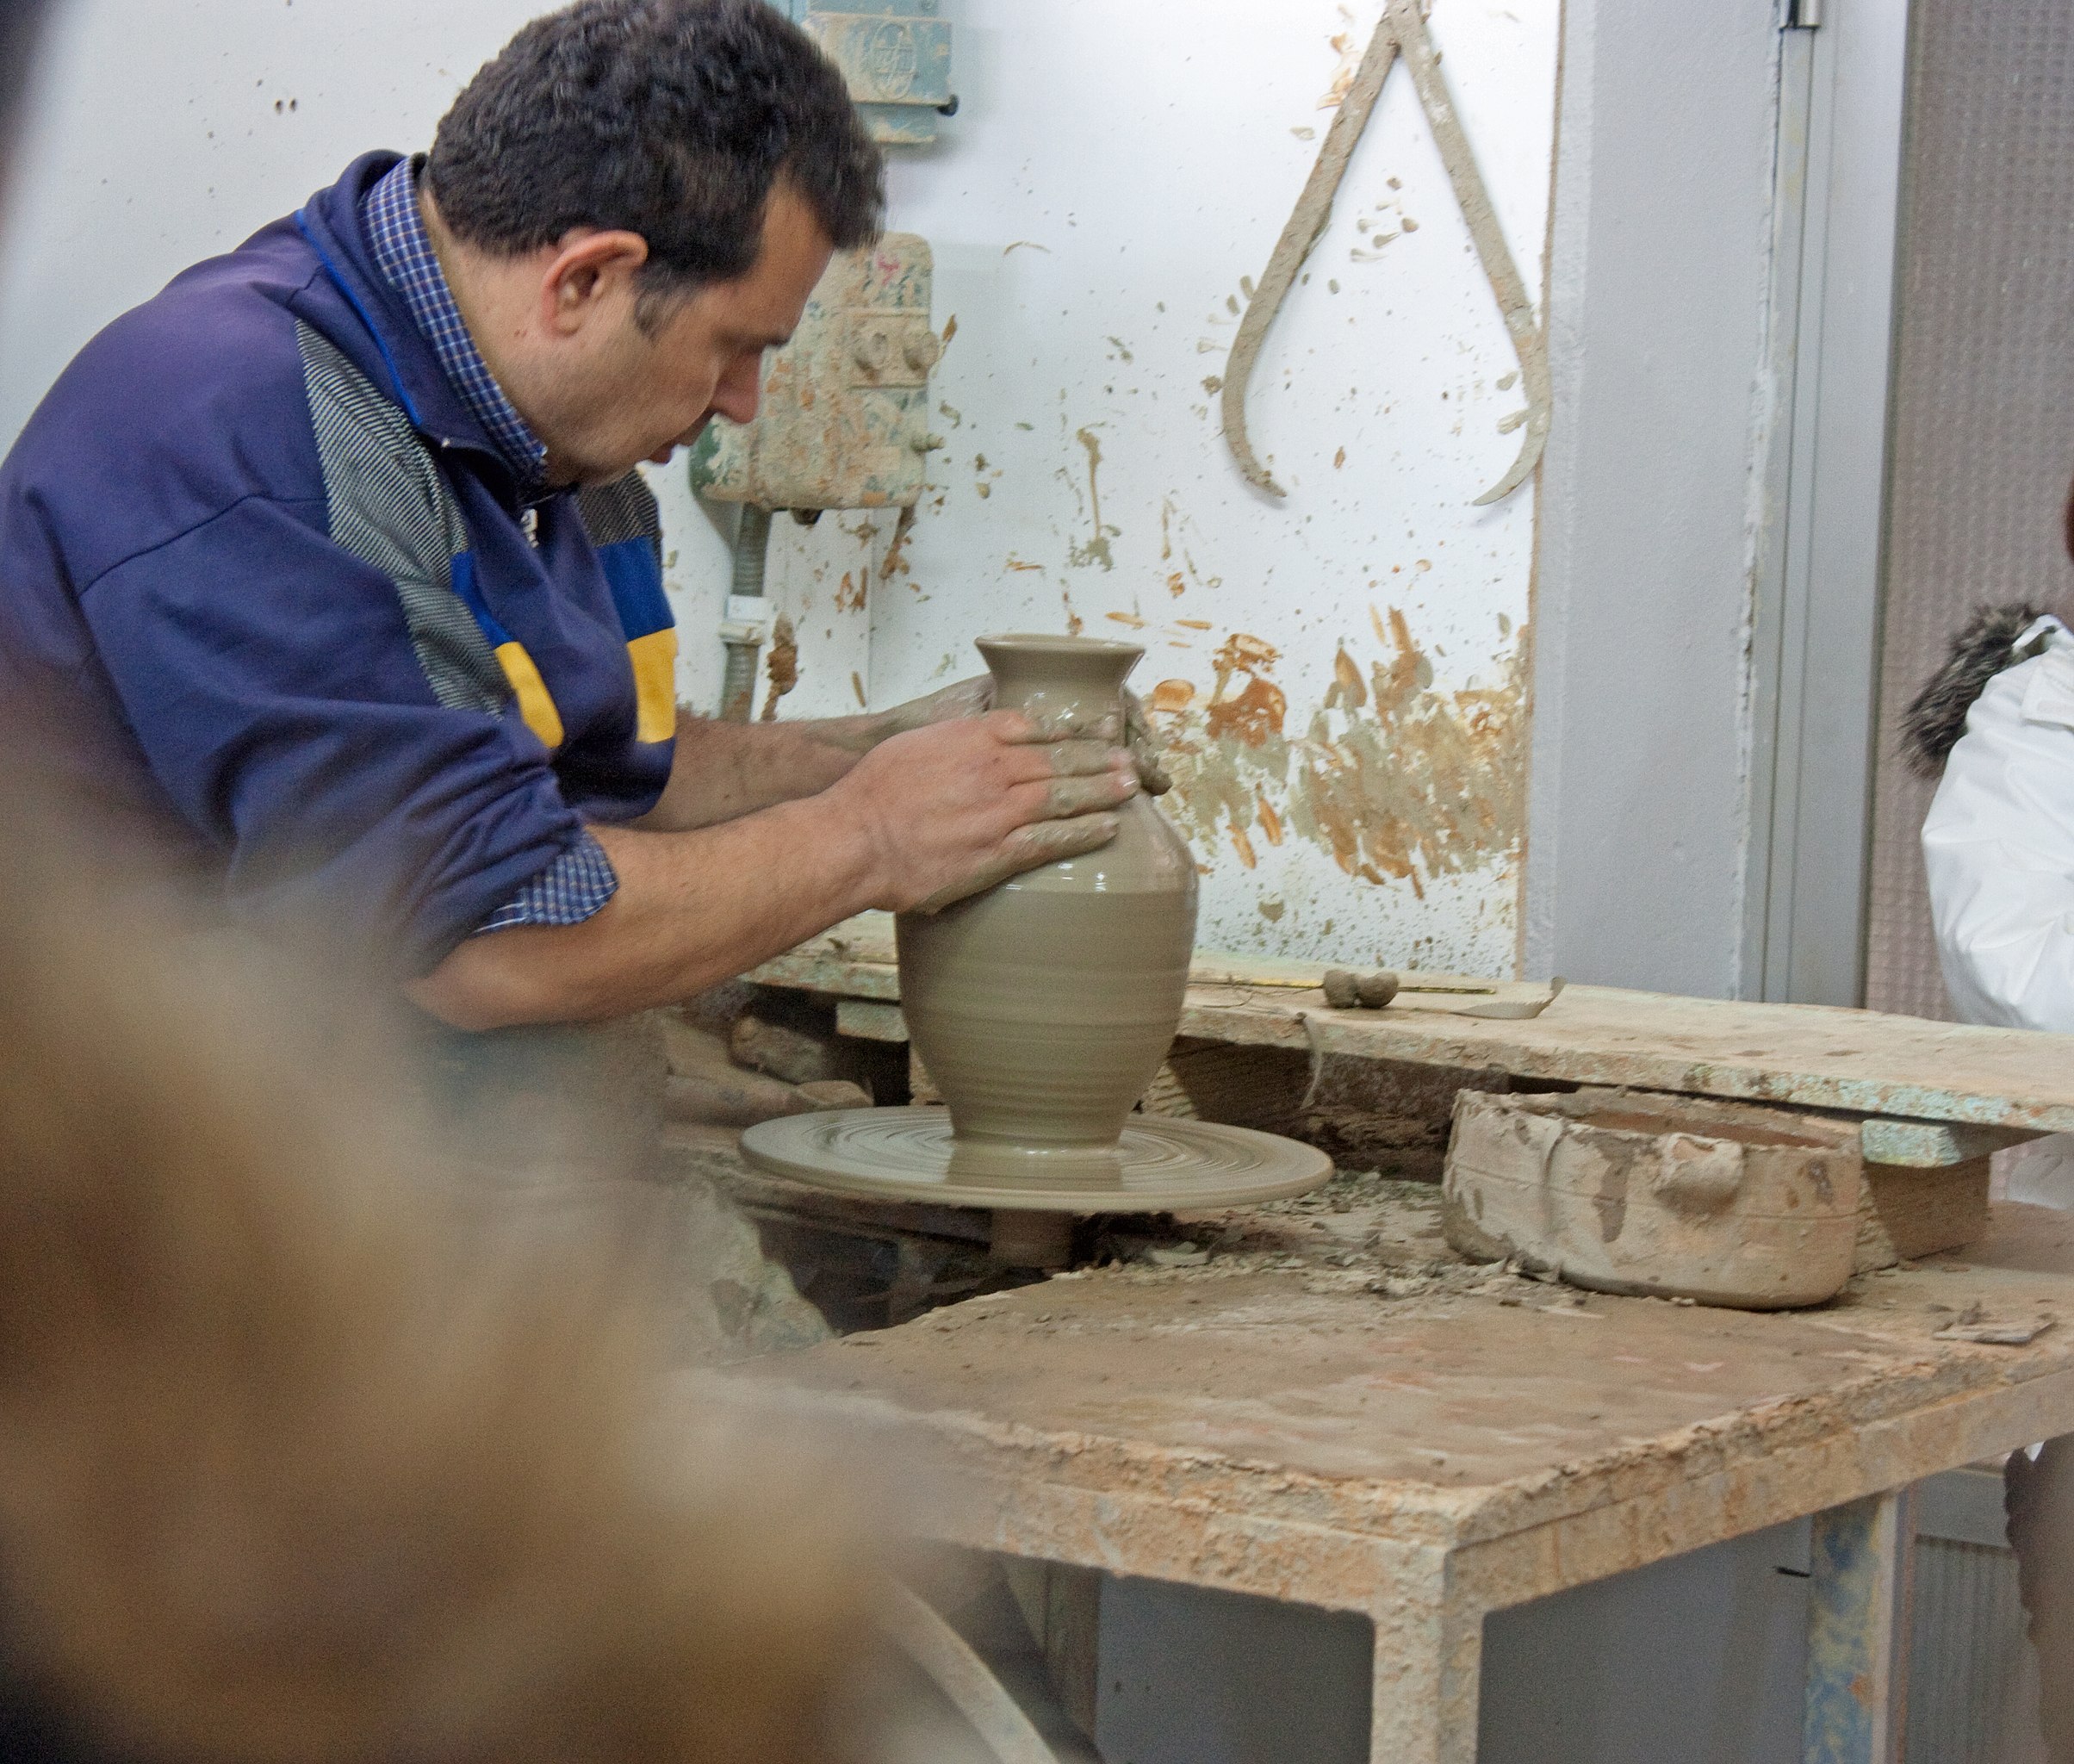 a man making a vase on a pottery wheel.